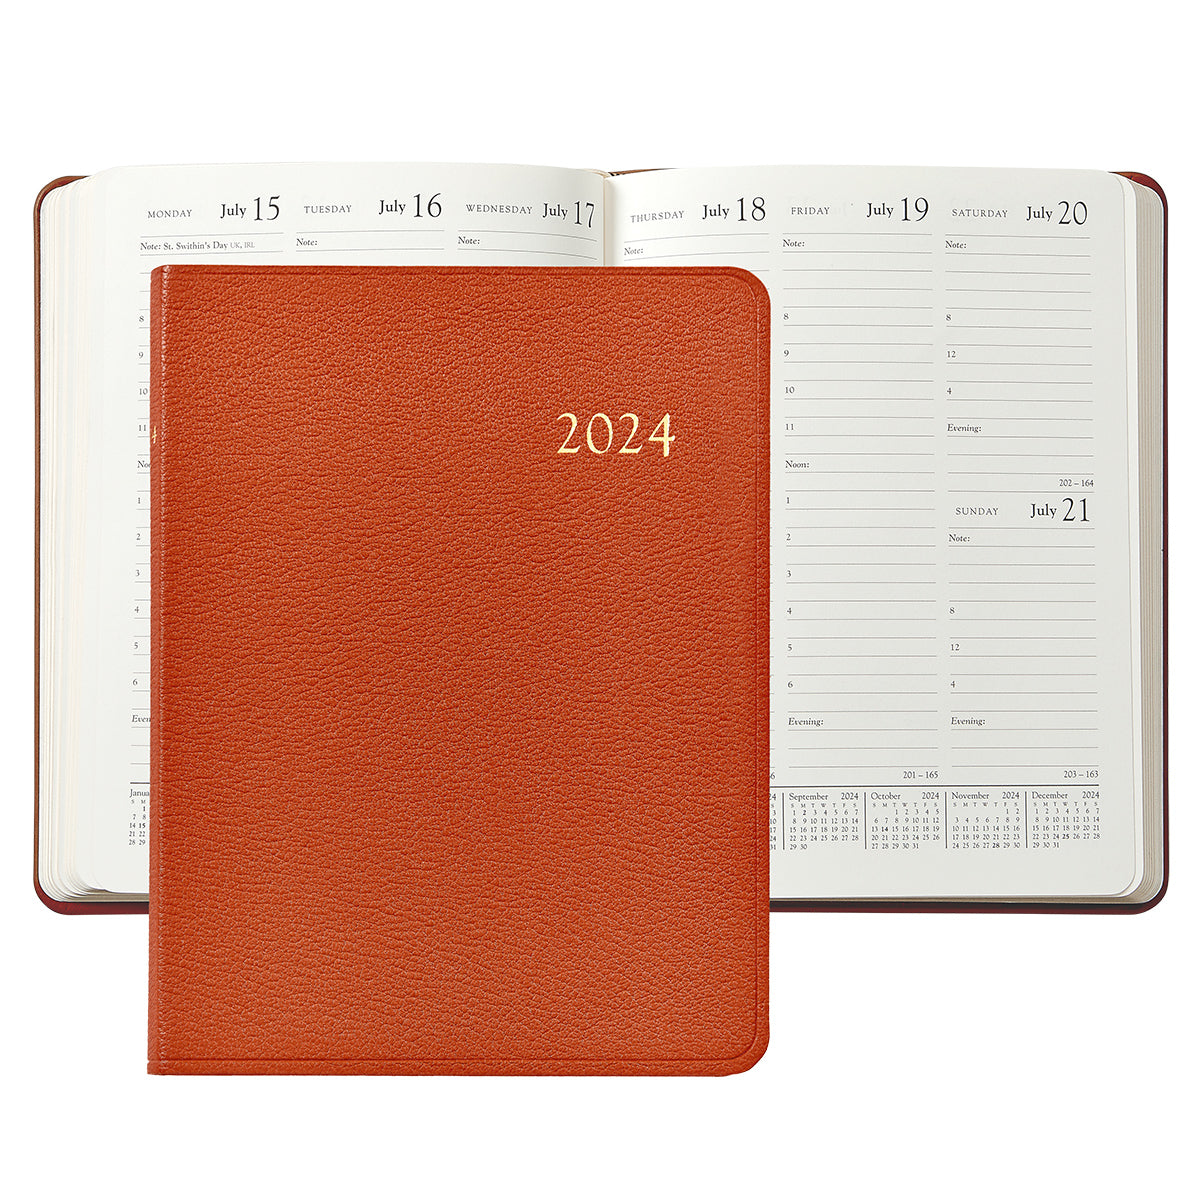 Graphic Image 2024 Desk Diary Orange Goatskin Leather